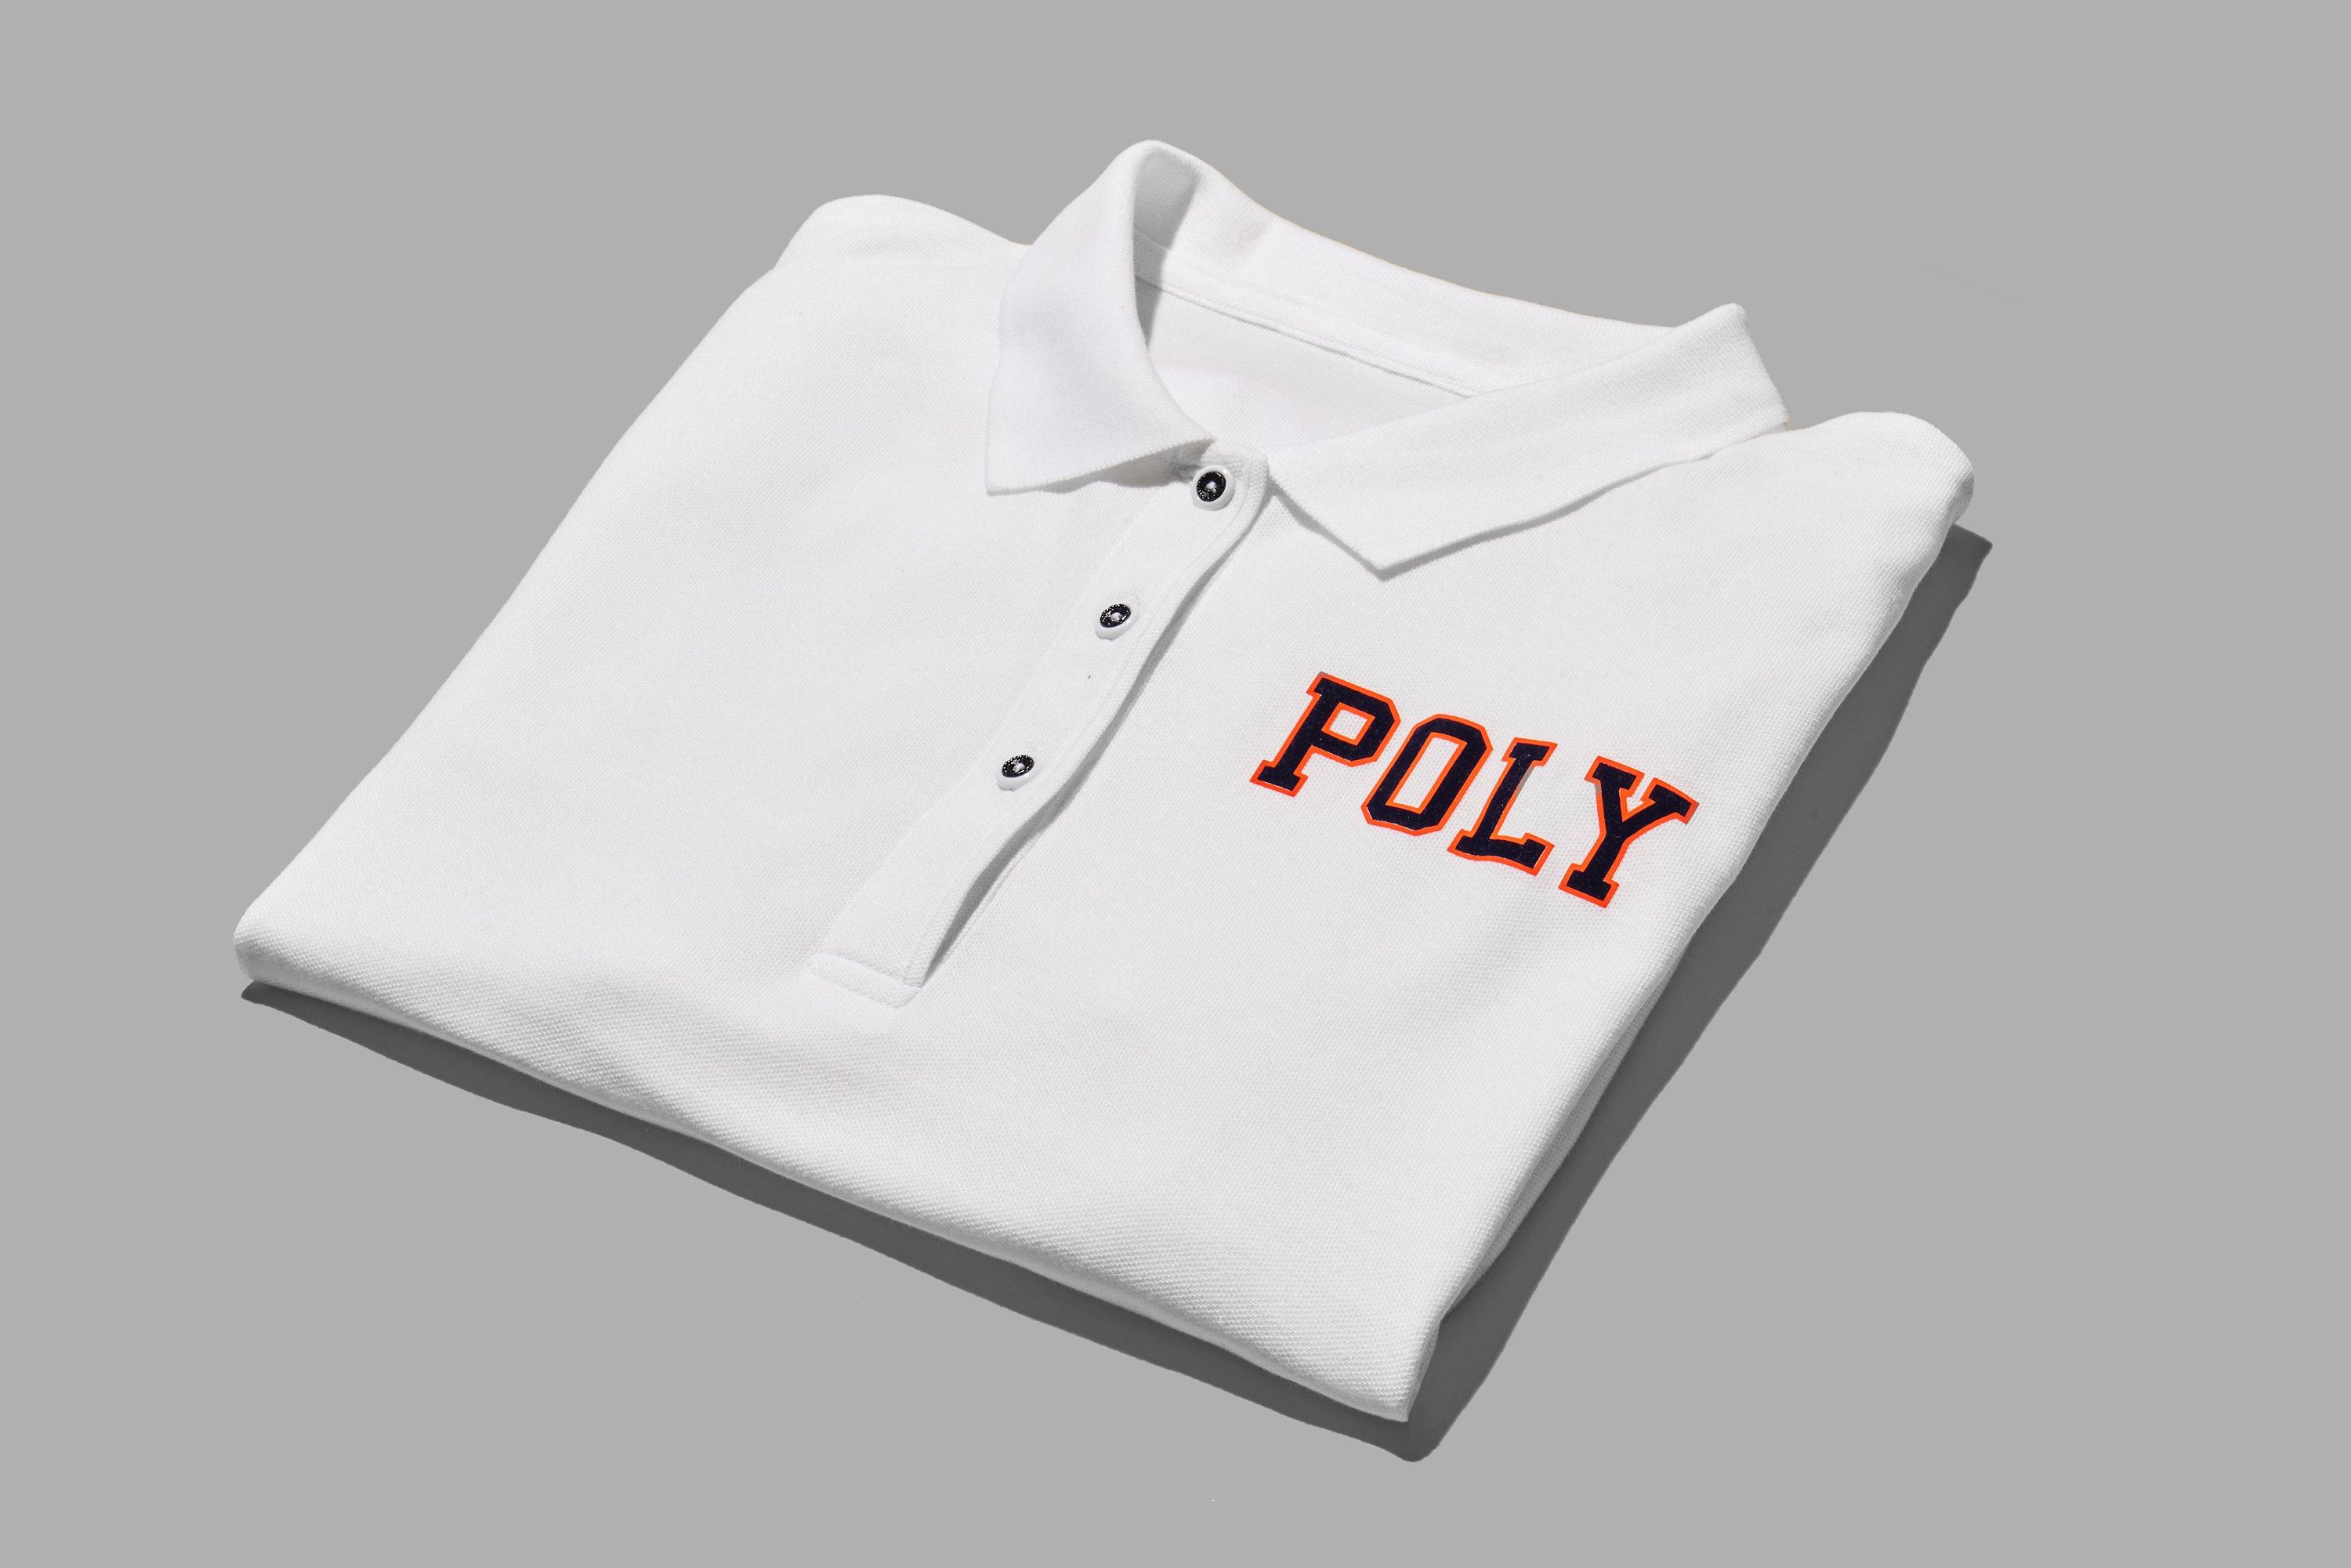 DillusionalMinds Custom Polo Shirt